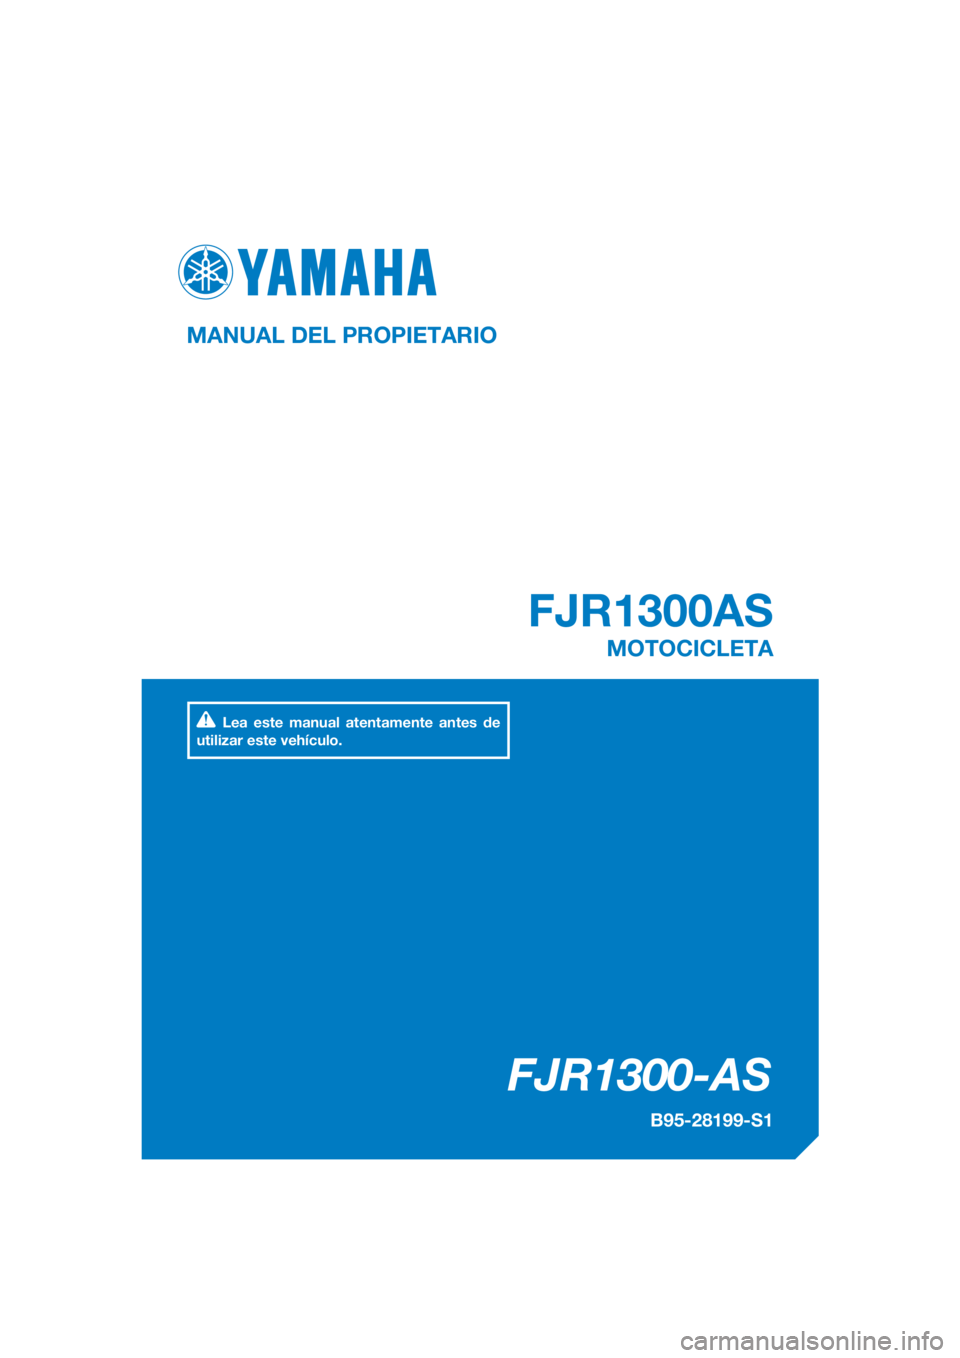 YAMAHA FJR1300AS 2018  Manuale de Empleo (in Spanish) 